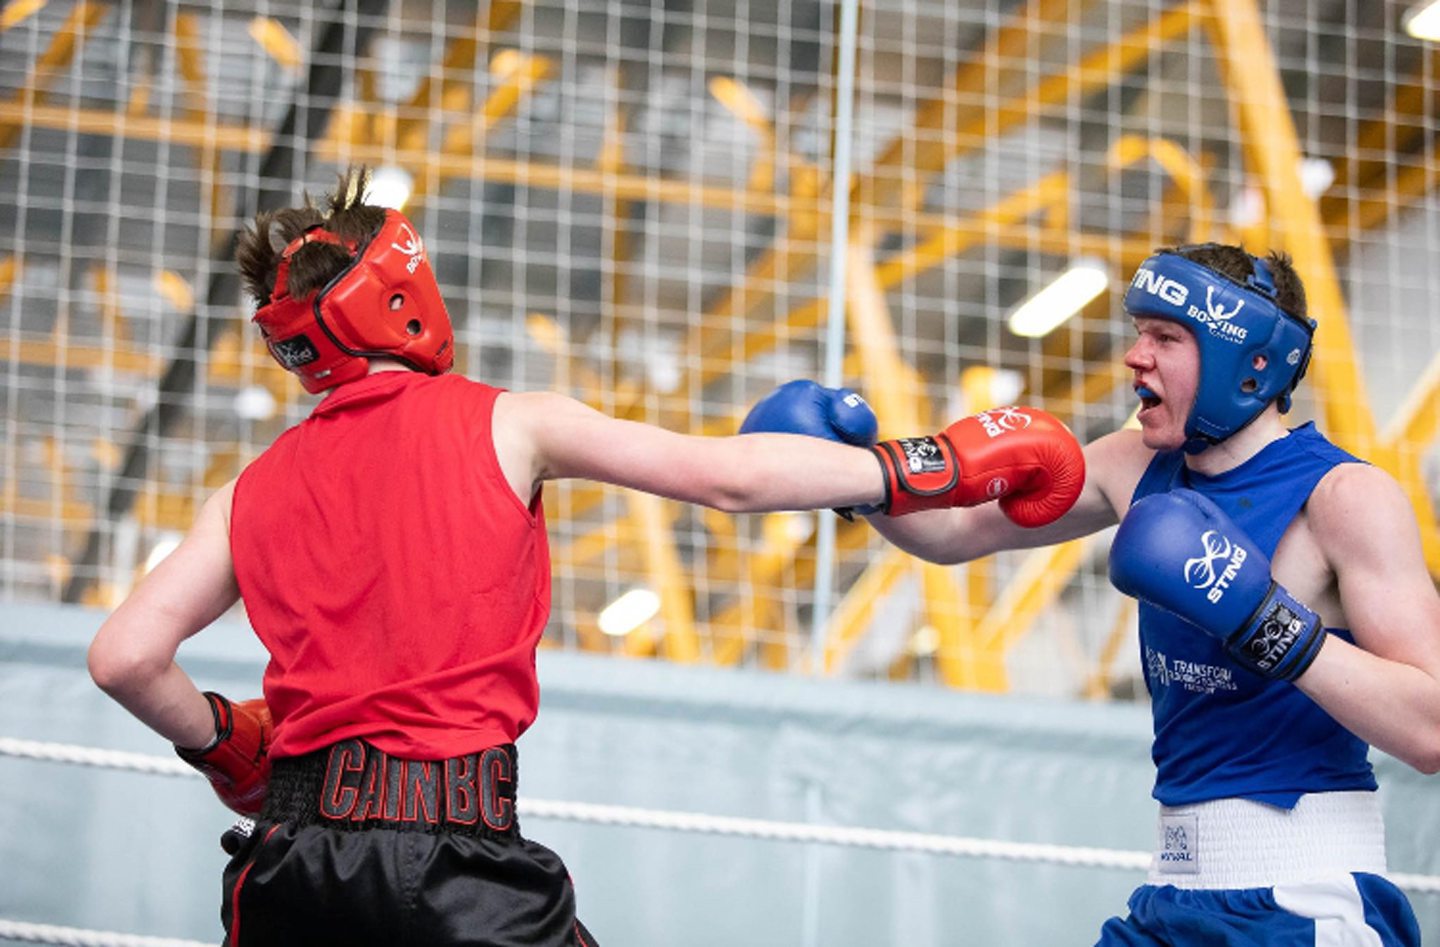 Granite City ABC boxer Ben Bonner in action during the Golden Gloves final. Image: Boxing Scotland 